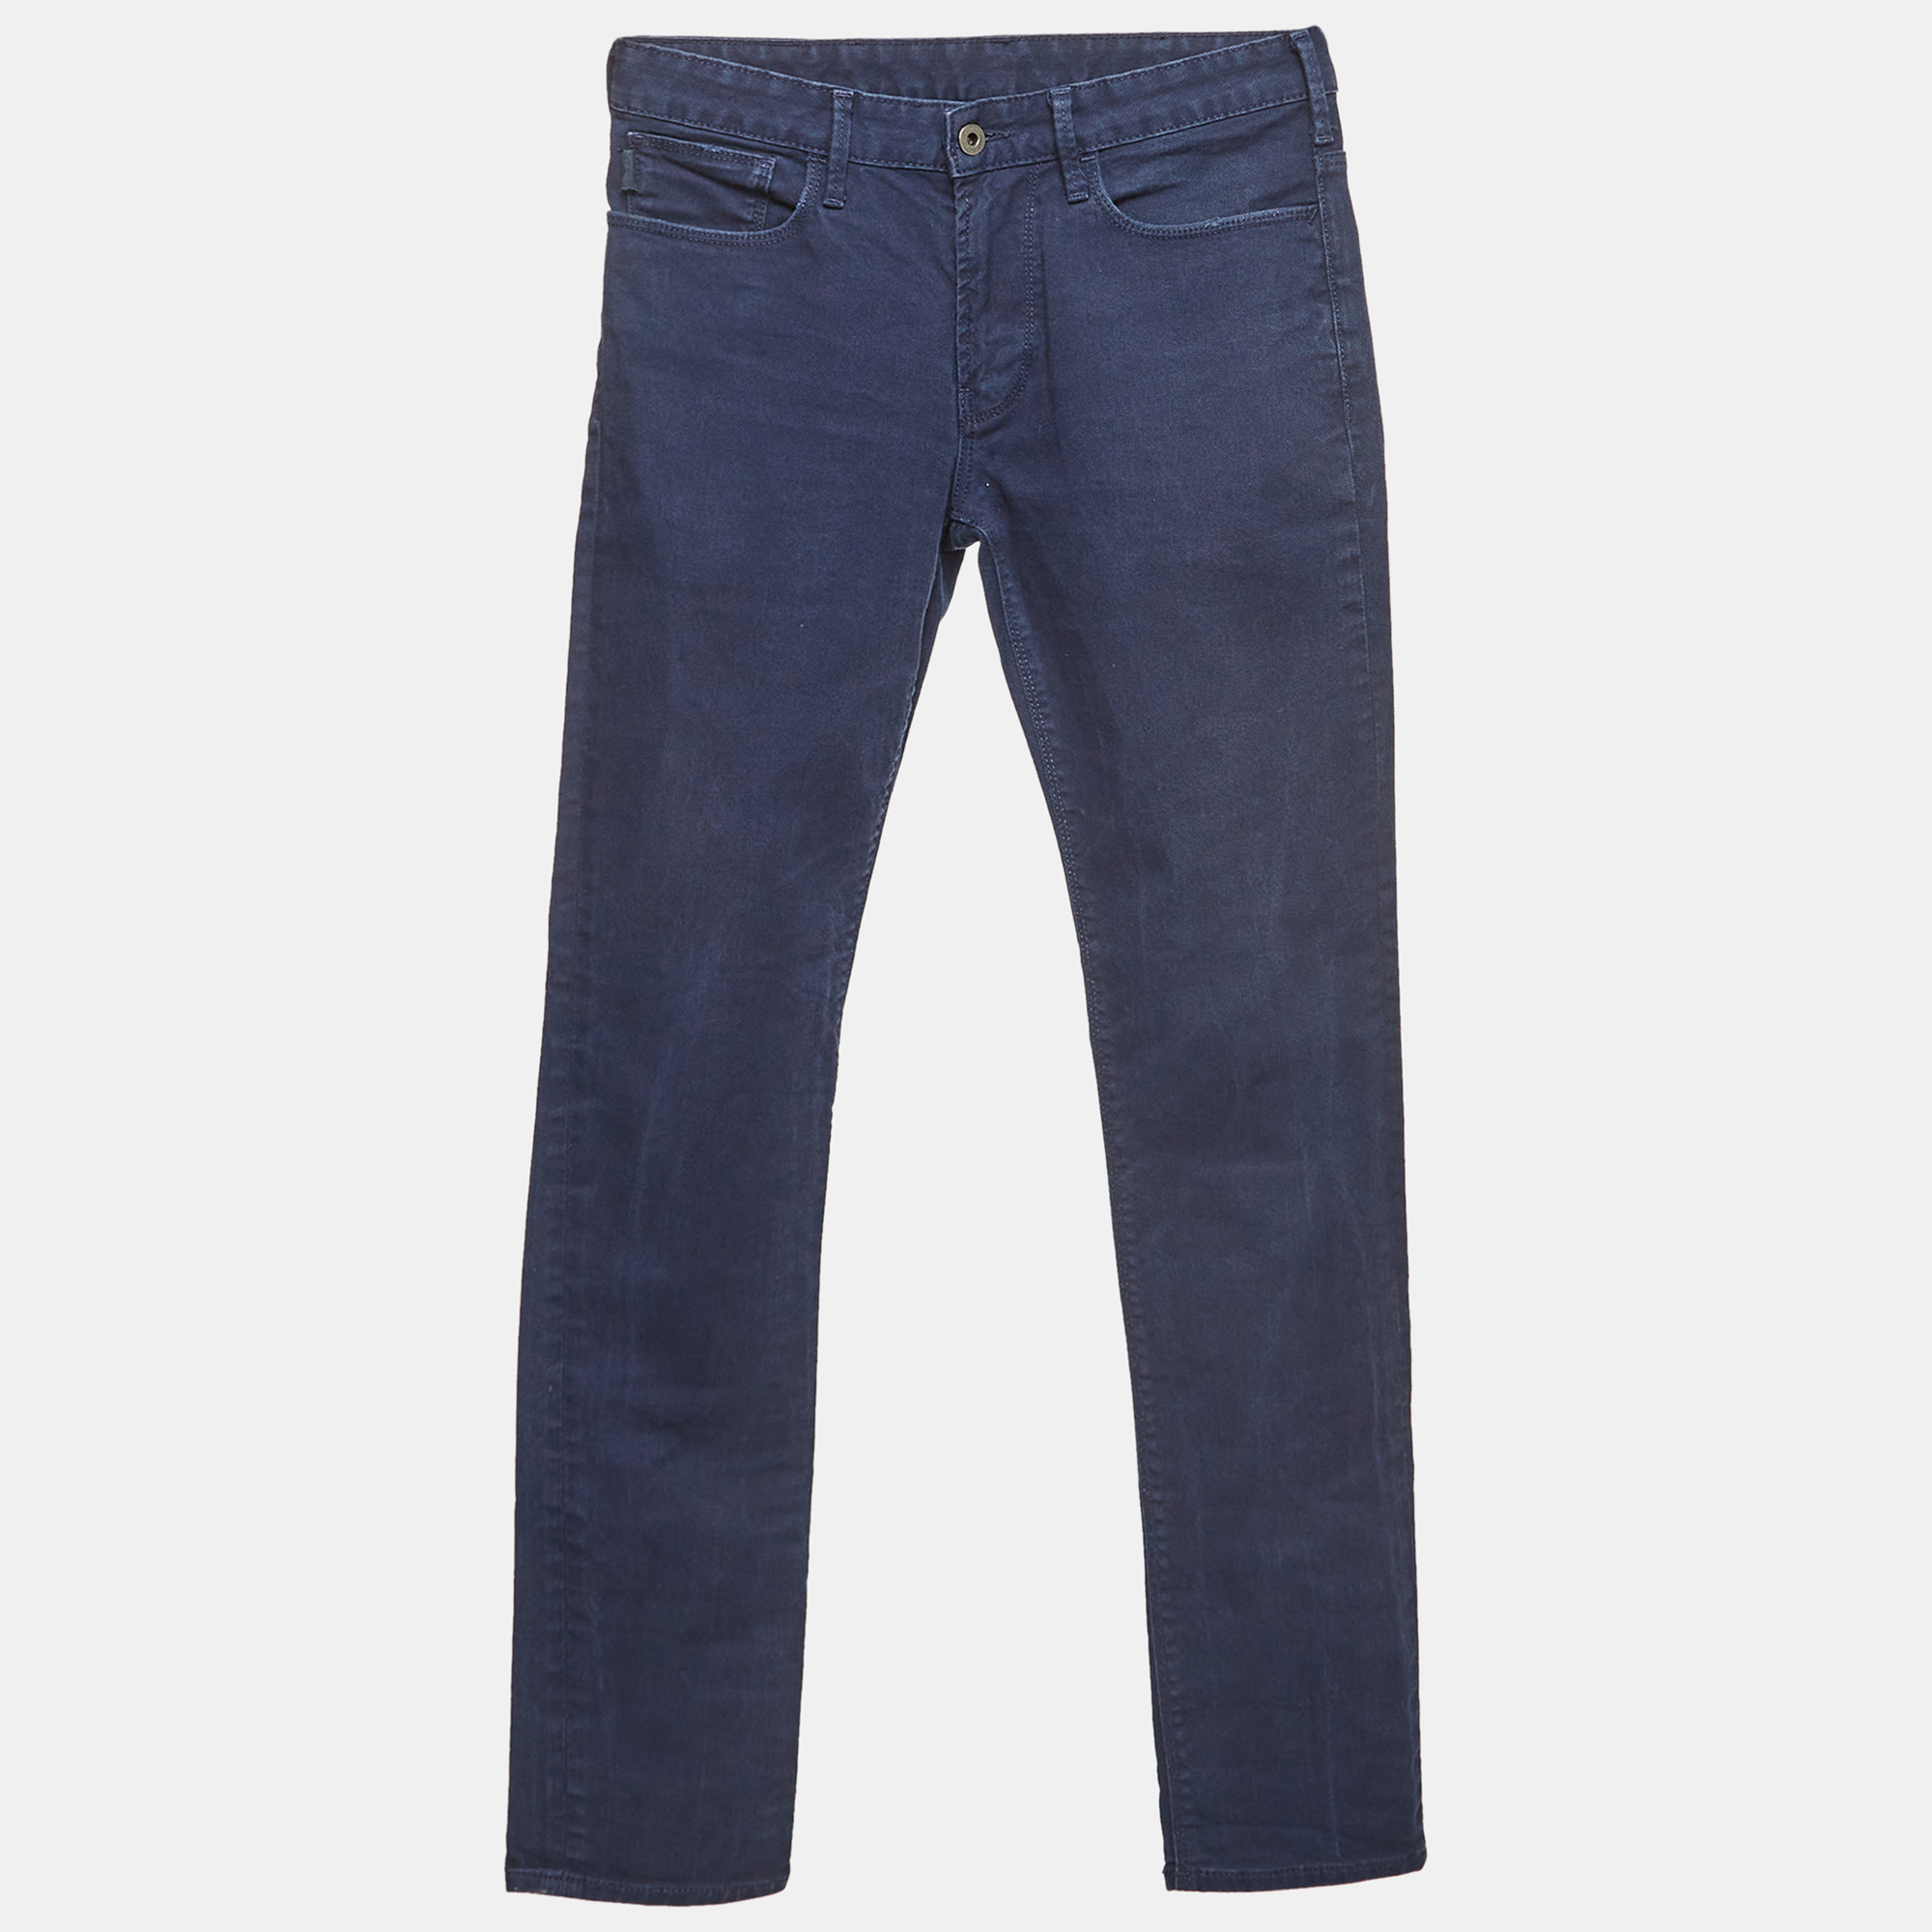 

Emporio Armani Navy Blue Denim Slim Fit Jeans M Waist 30"